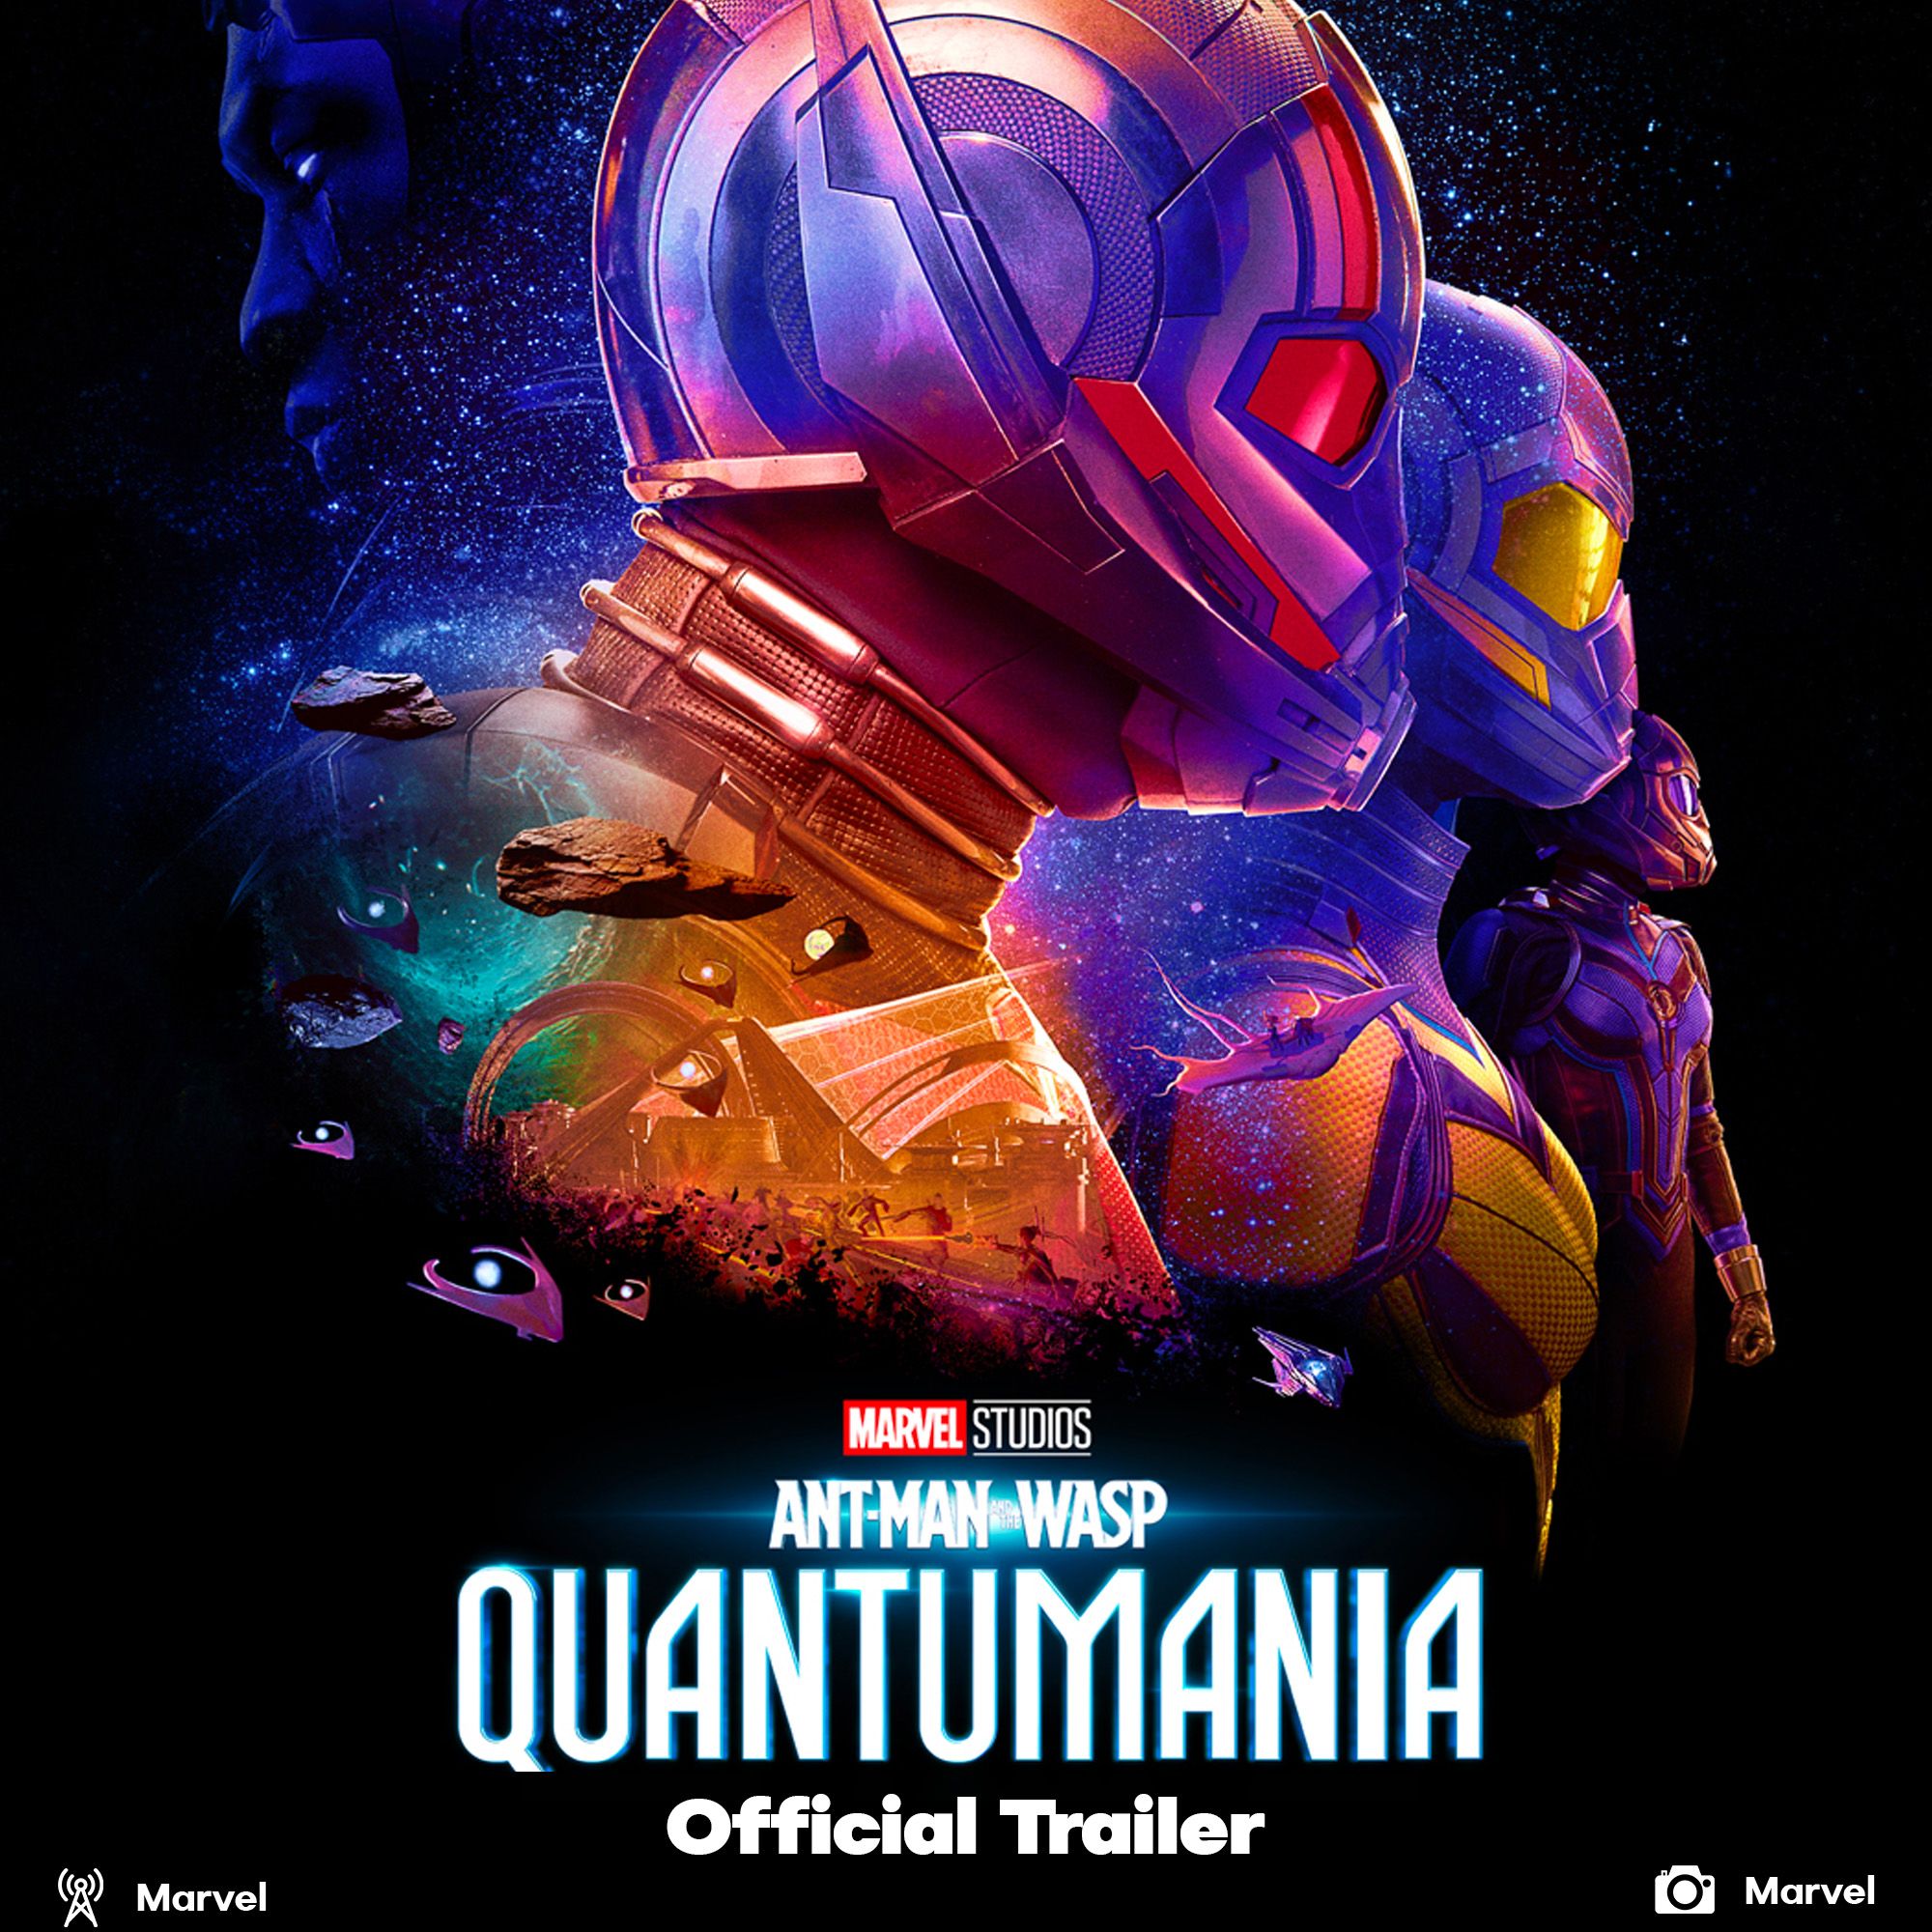 Ant-Man and the Wasp: Qauatumania